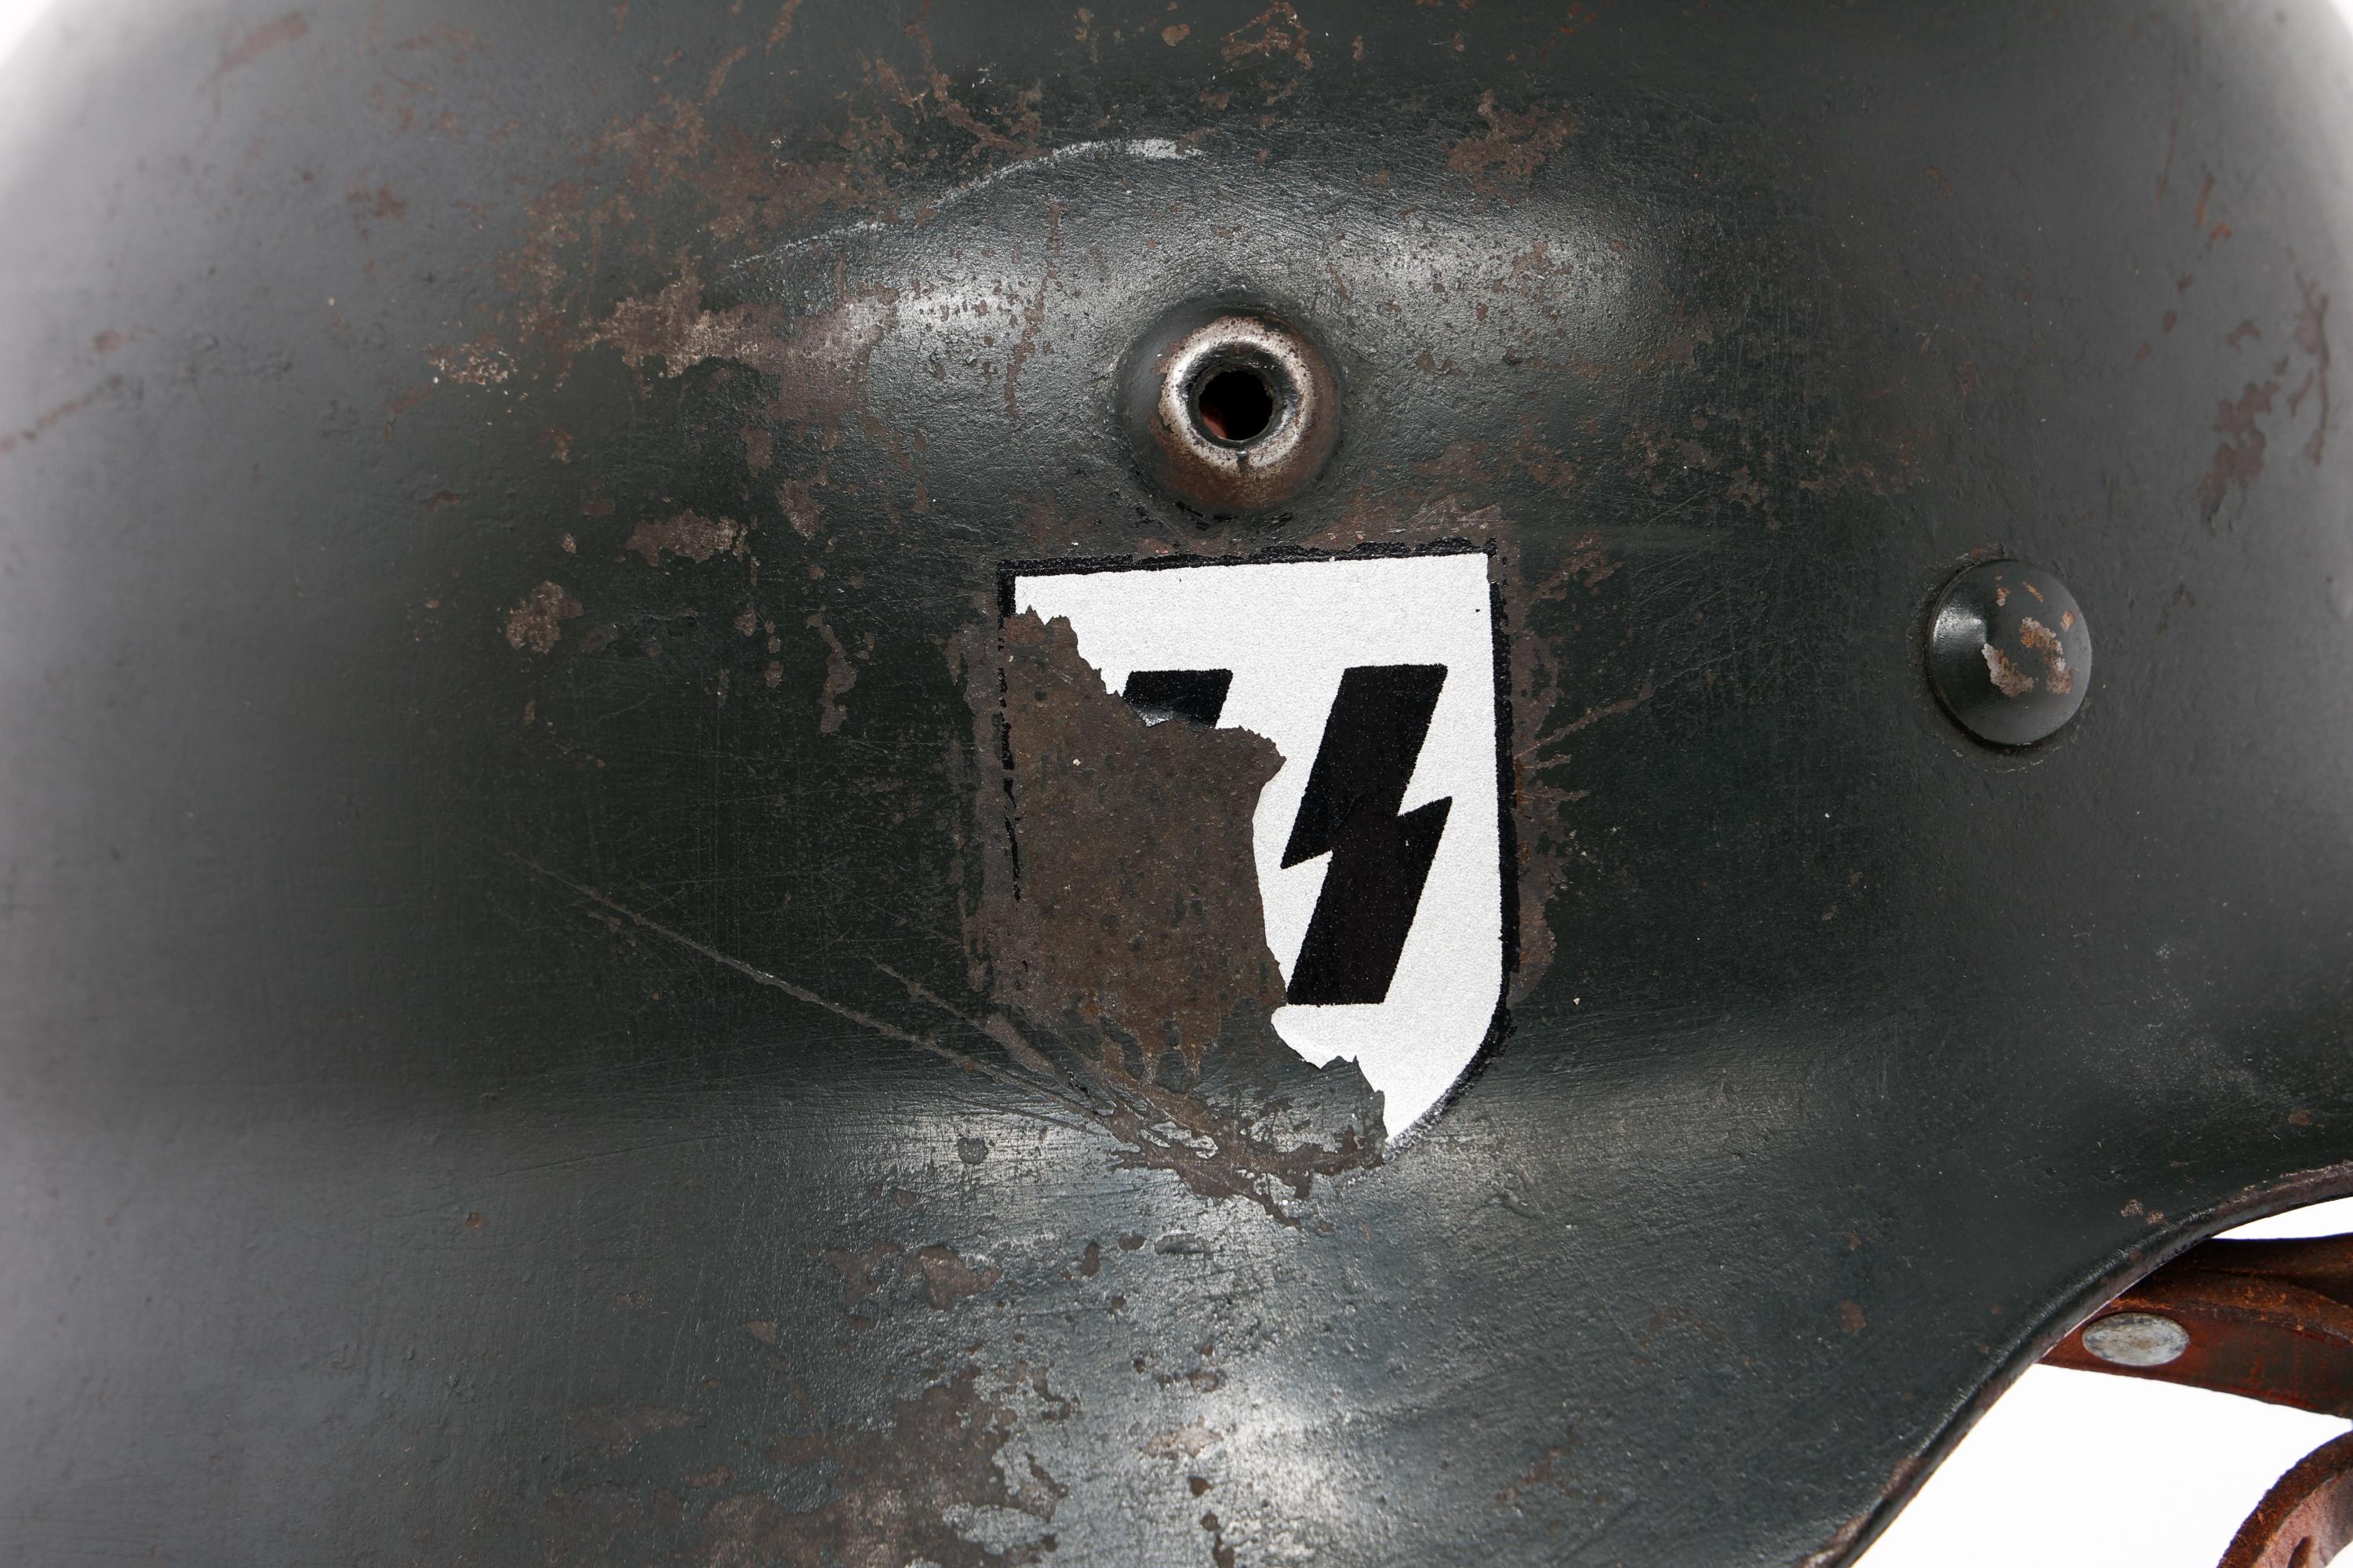 REFURBISHED WWII GERMAN M40 COMBAT HELMET